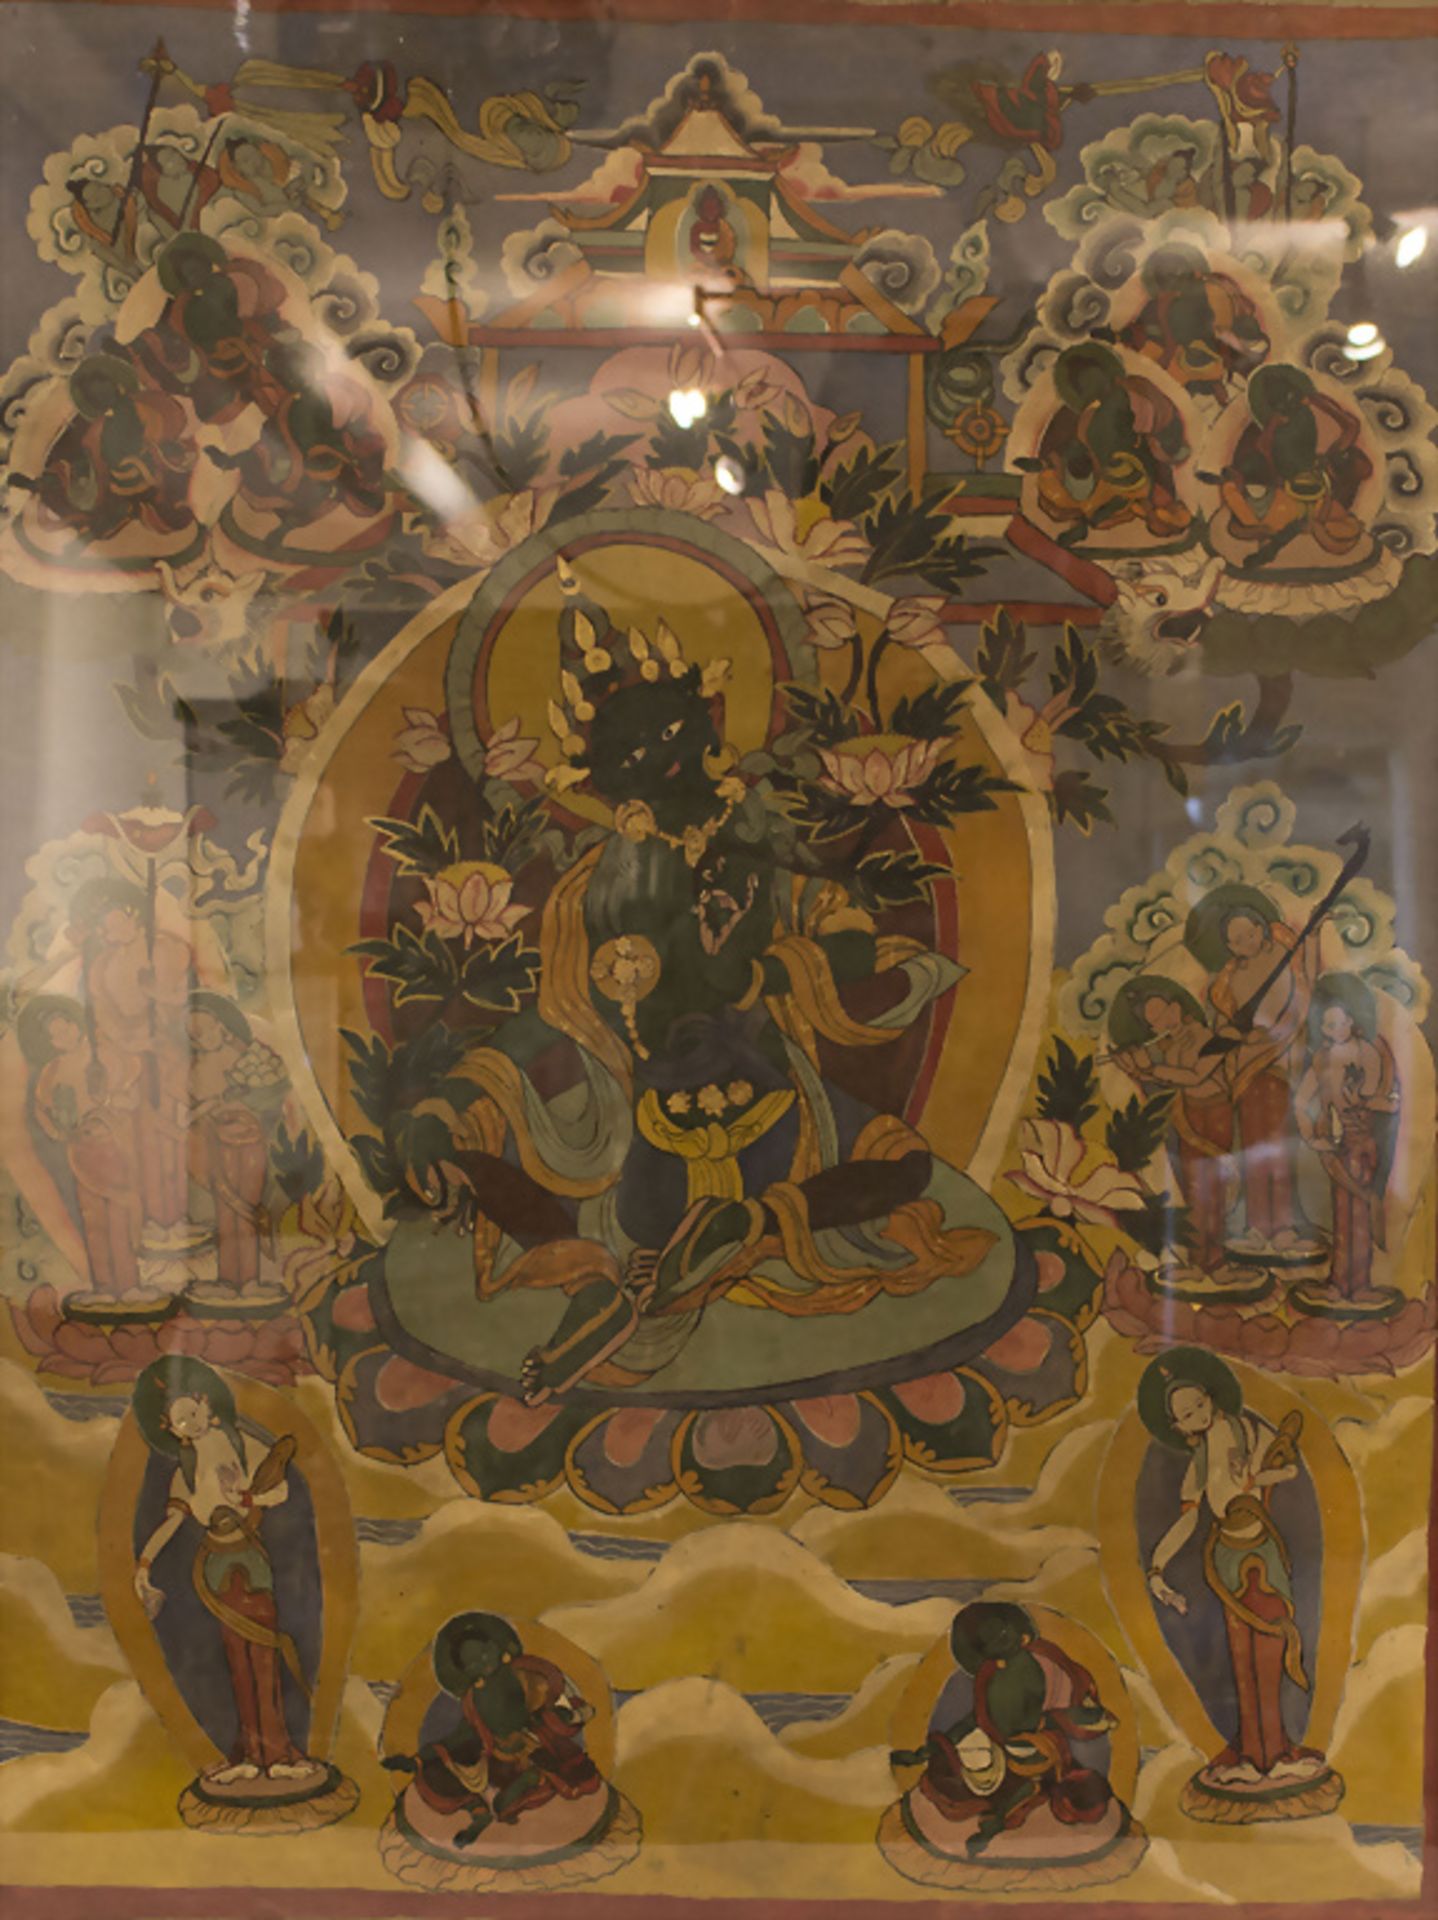 Tangka mit Grüner Tara, Tibet, 18 Jh.